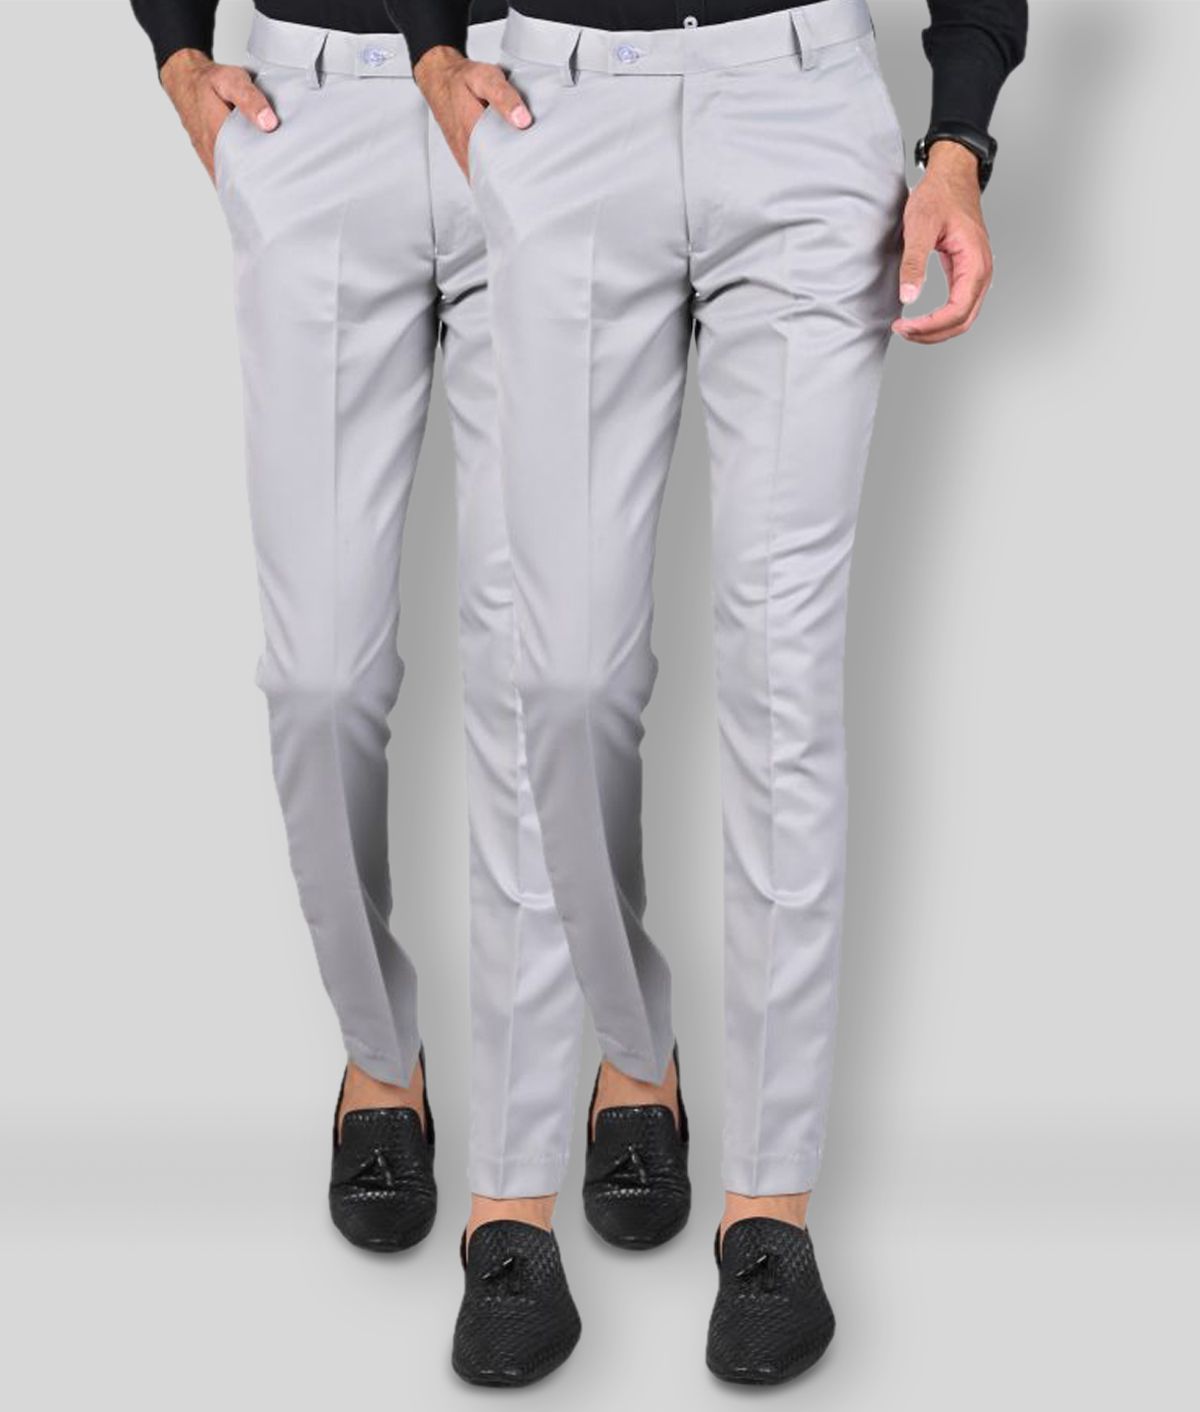     			MANCREW - Light Grey Polycotton Slim - Fit Men's Formal Pants ( Pack of 2 )